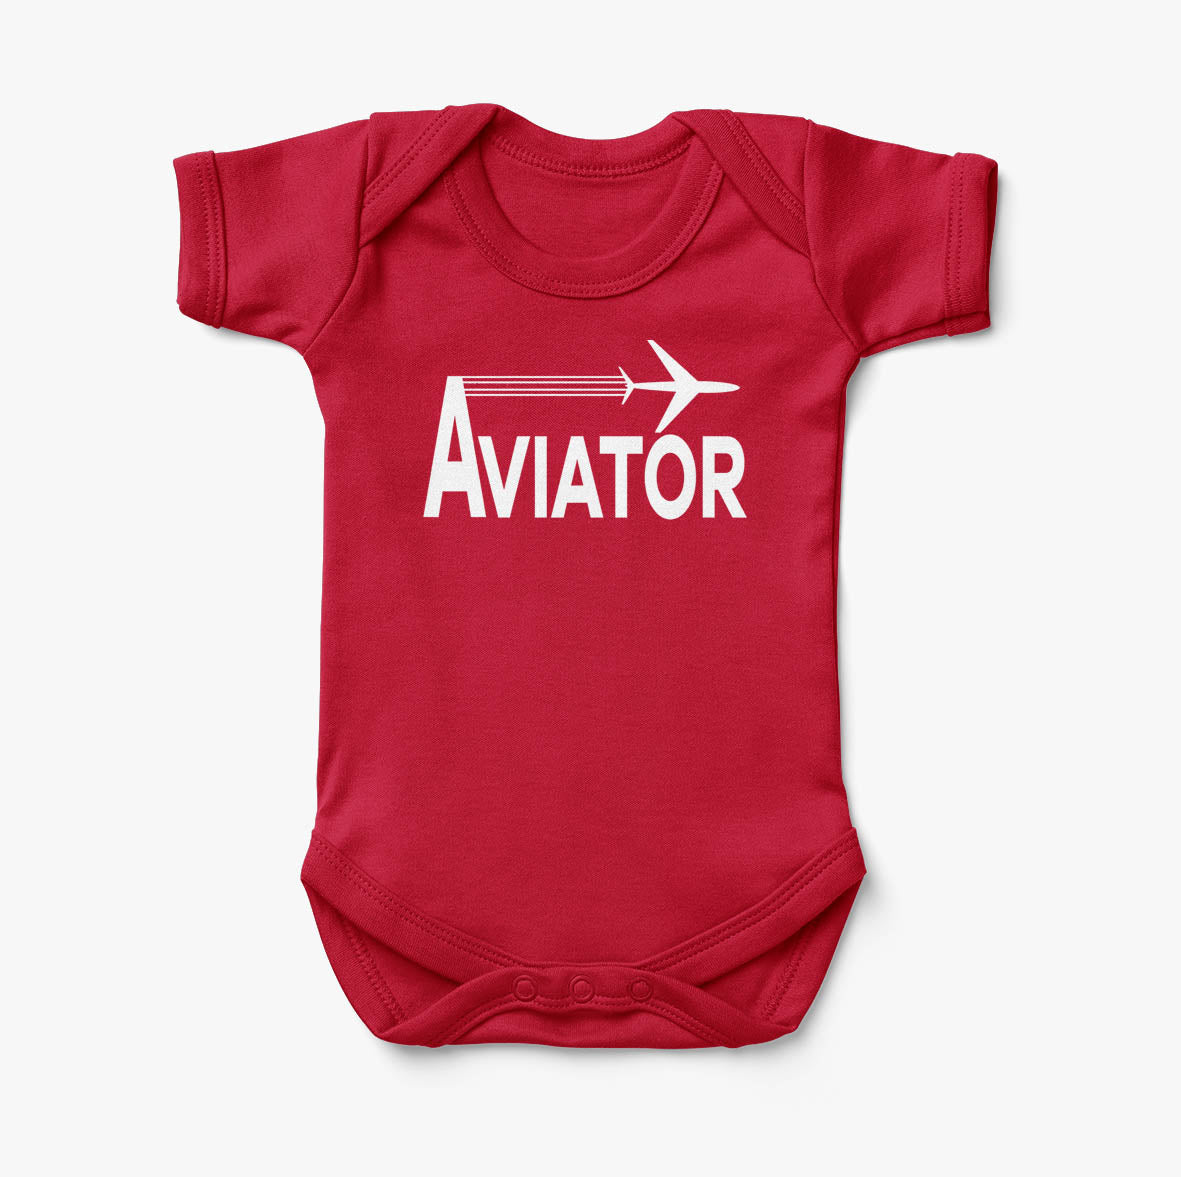 Aviator Designed Baby Bodysuits